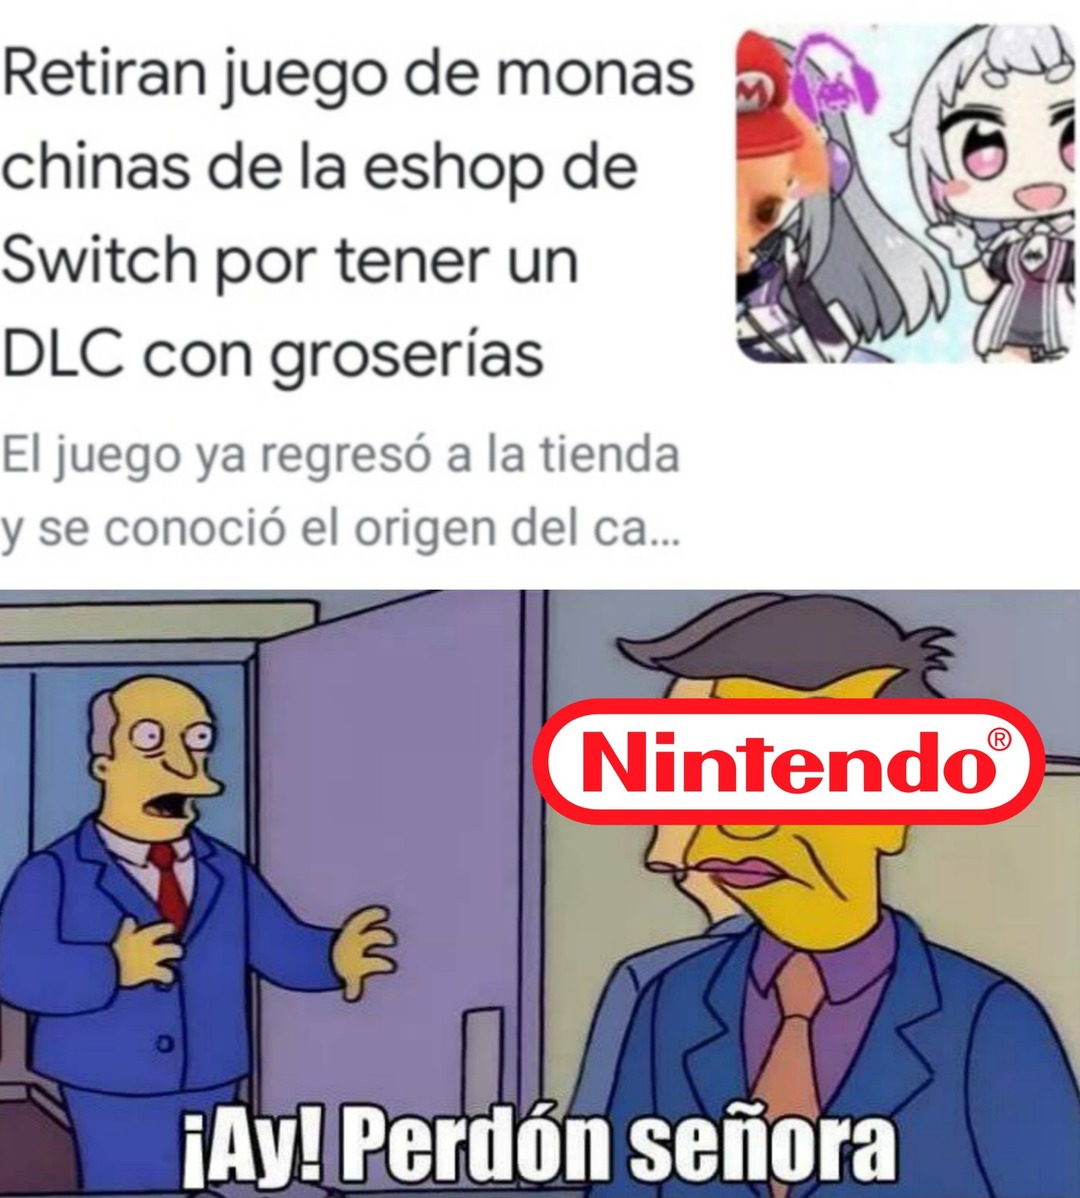 ¿Enserio Nintendo? - meme